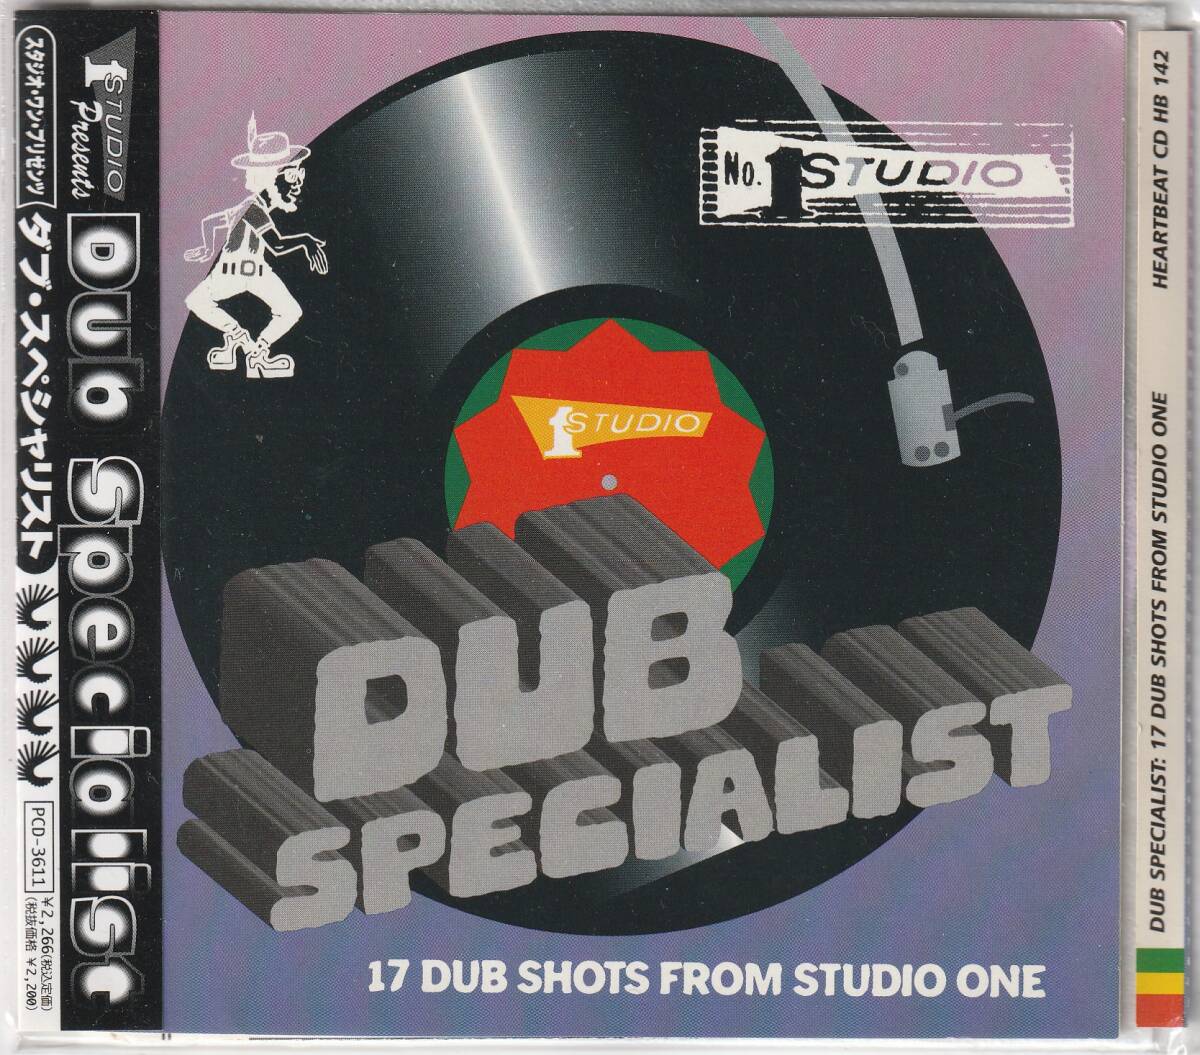 US盤CD★Studio One Dub Specialist★17 Dub Shots From Studio One★95年★Heat Beat★試聴可能の画像1